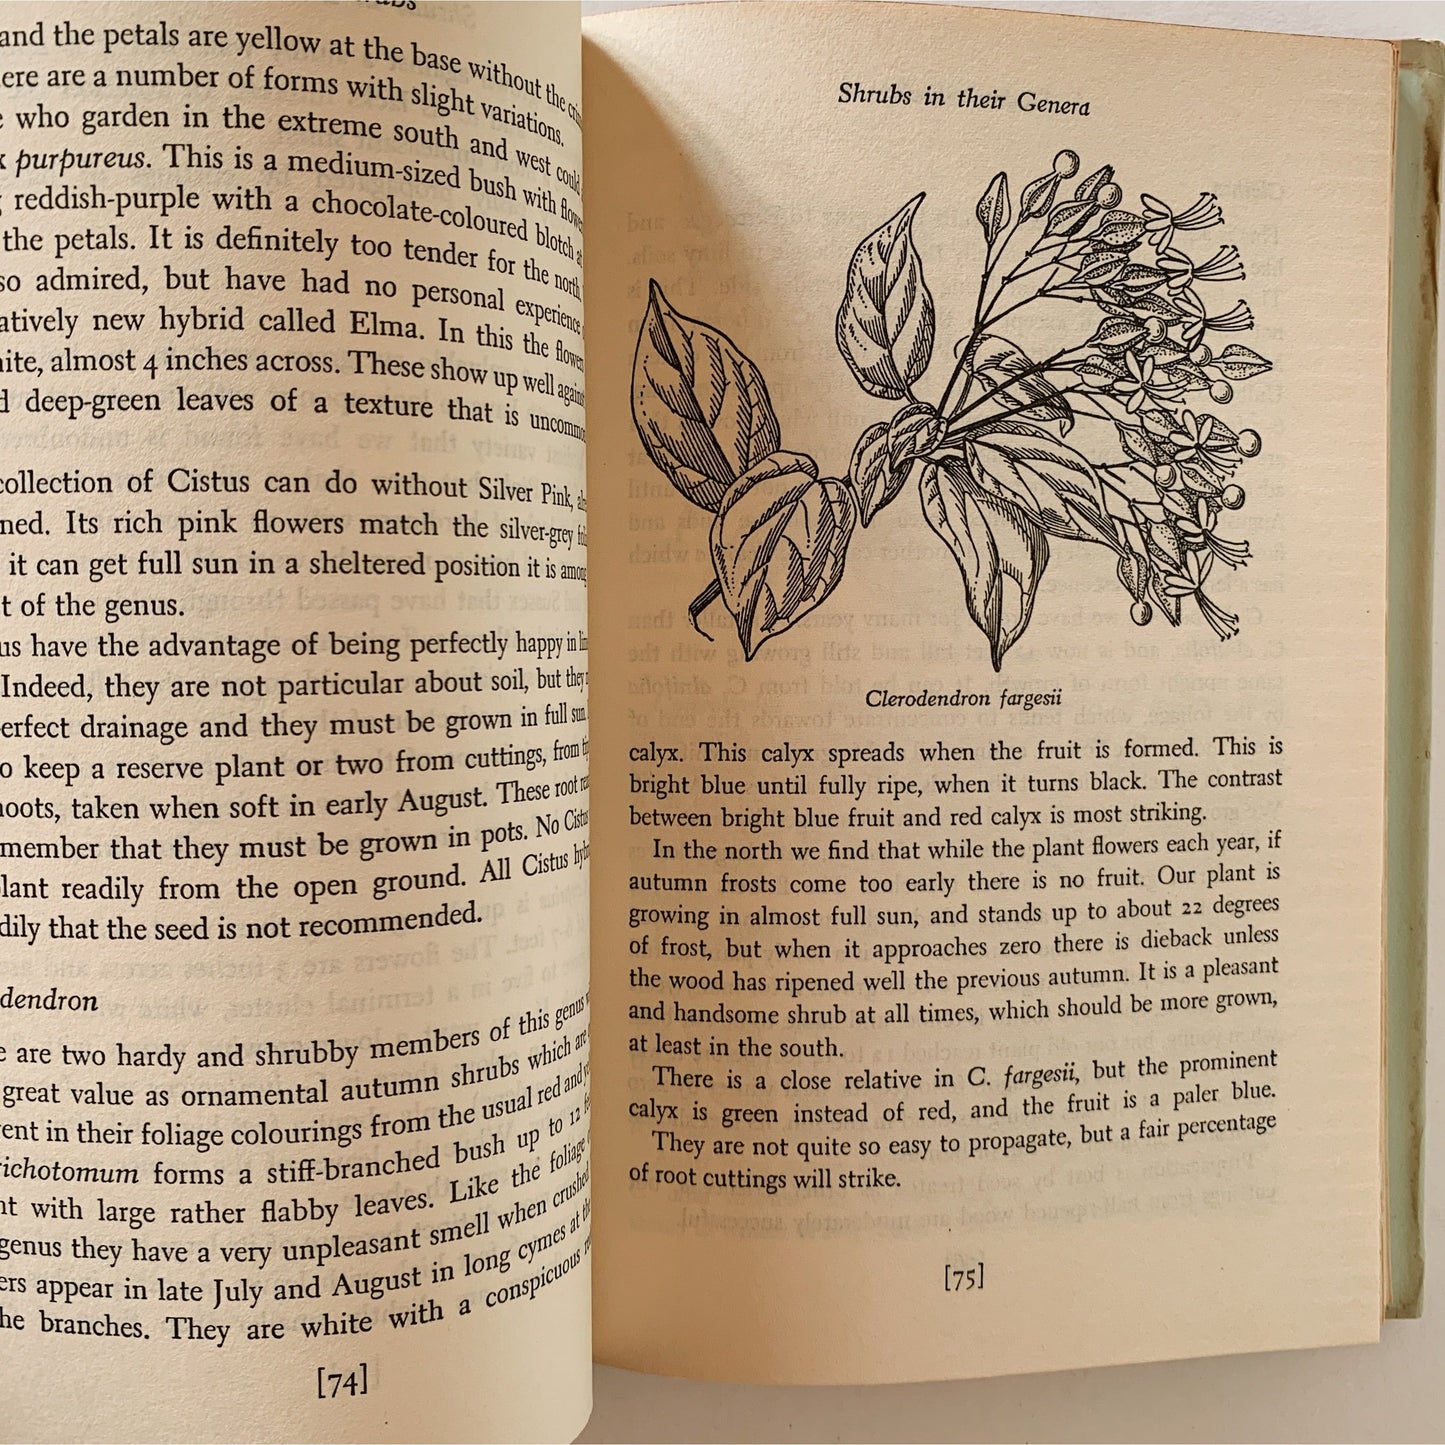 Modern Shrubs, 1958, Hardcover Gardening Book